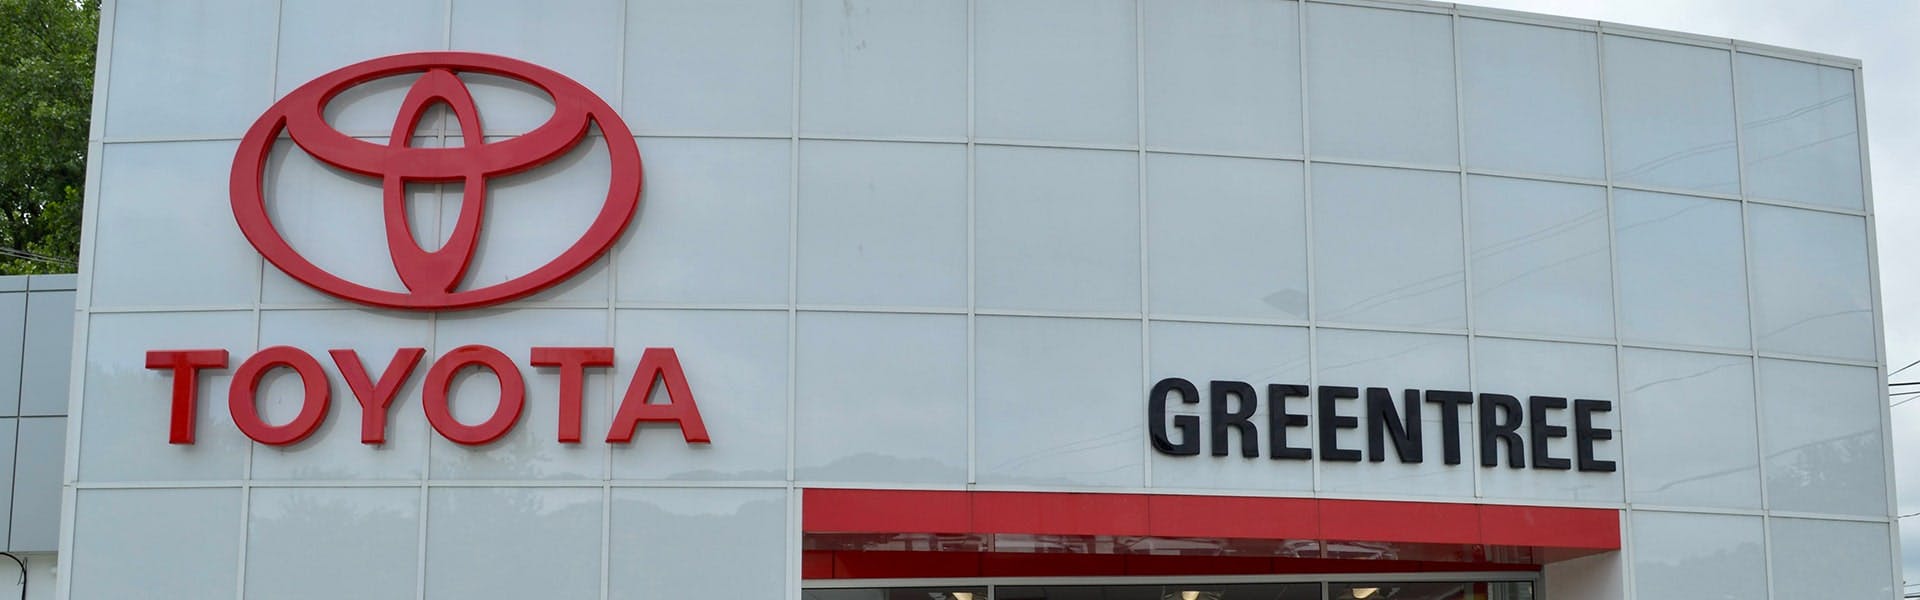 toyota logo next to greentree logo on building